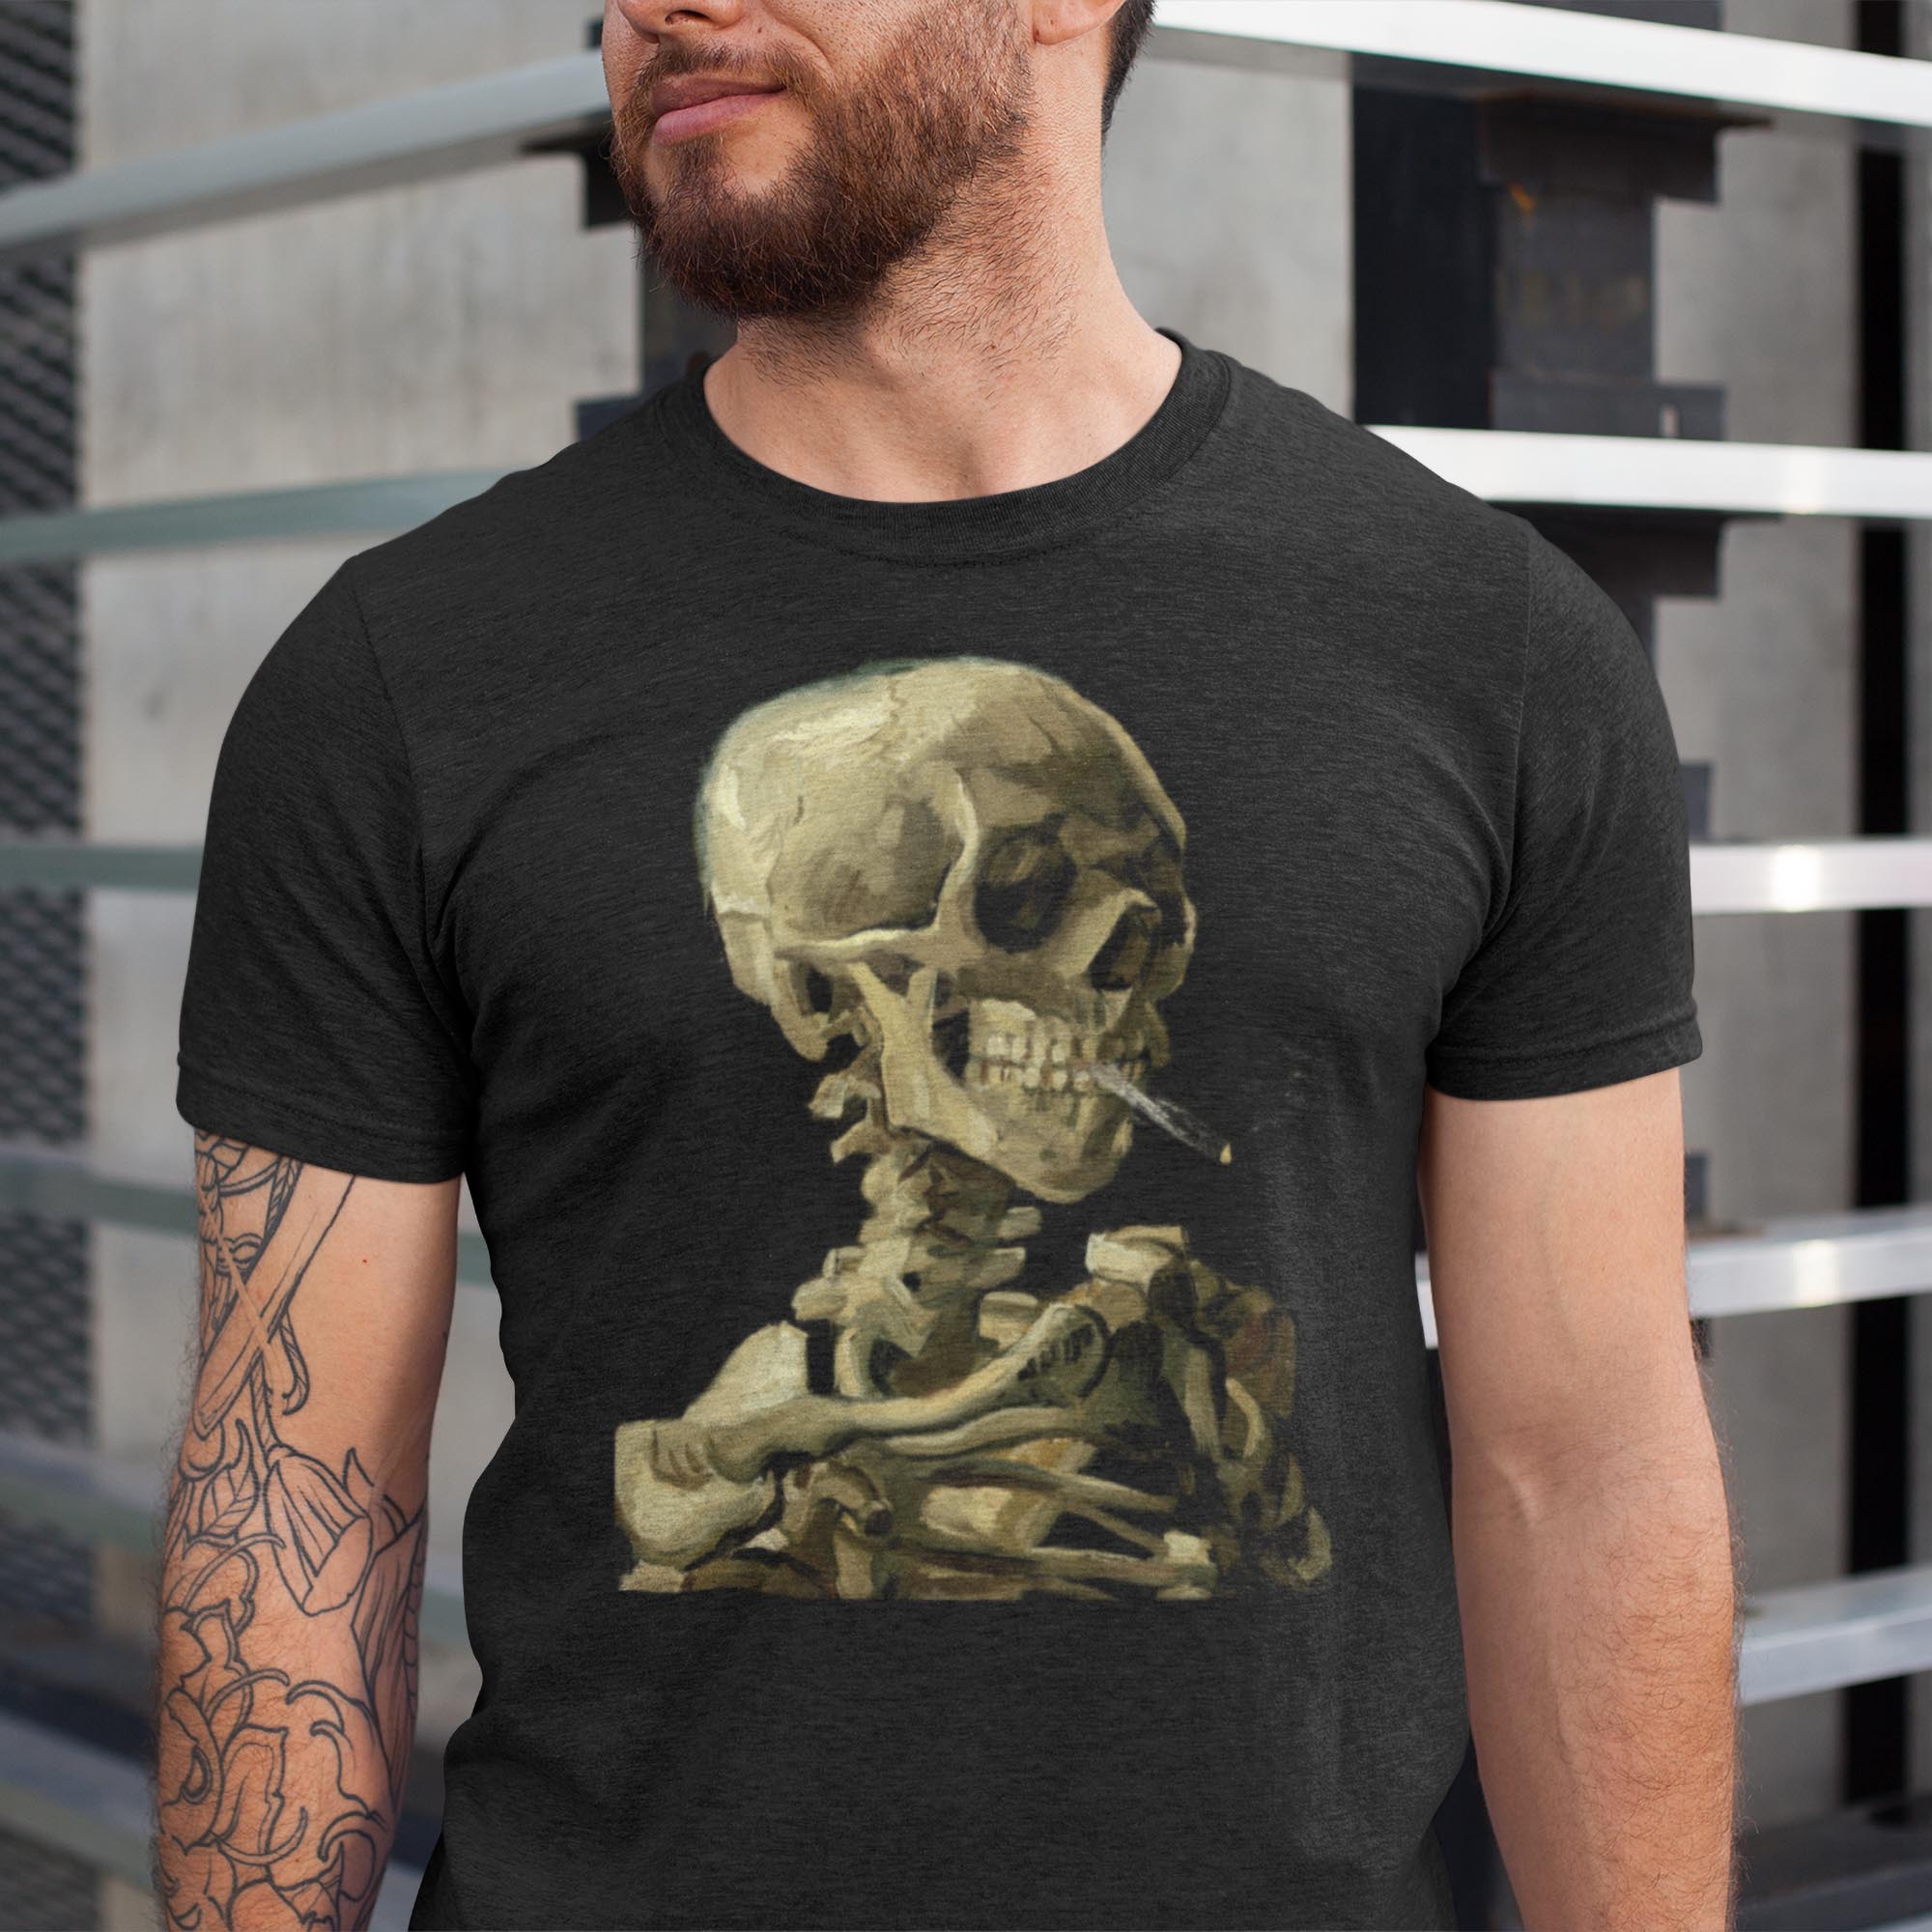 T-Shirts Spliff Skeleton Smoking Weed Skull Cannabis 420, Pot, Herb, Ganja, Marijuana, Stoner, Pothead Van Gogh Weed Graphic T-Shirt